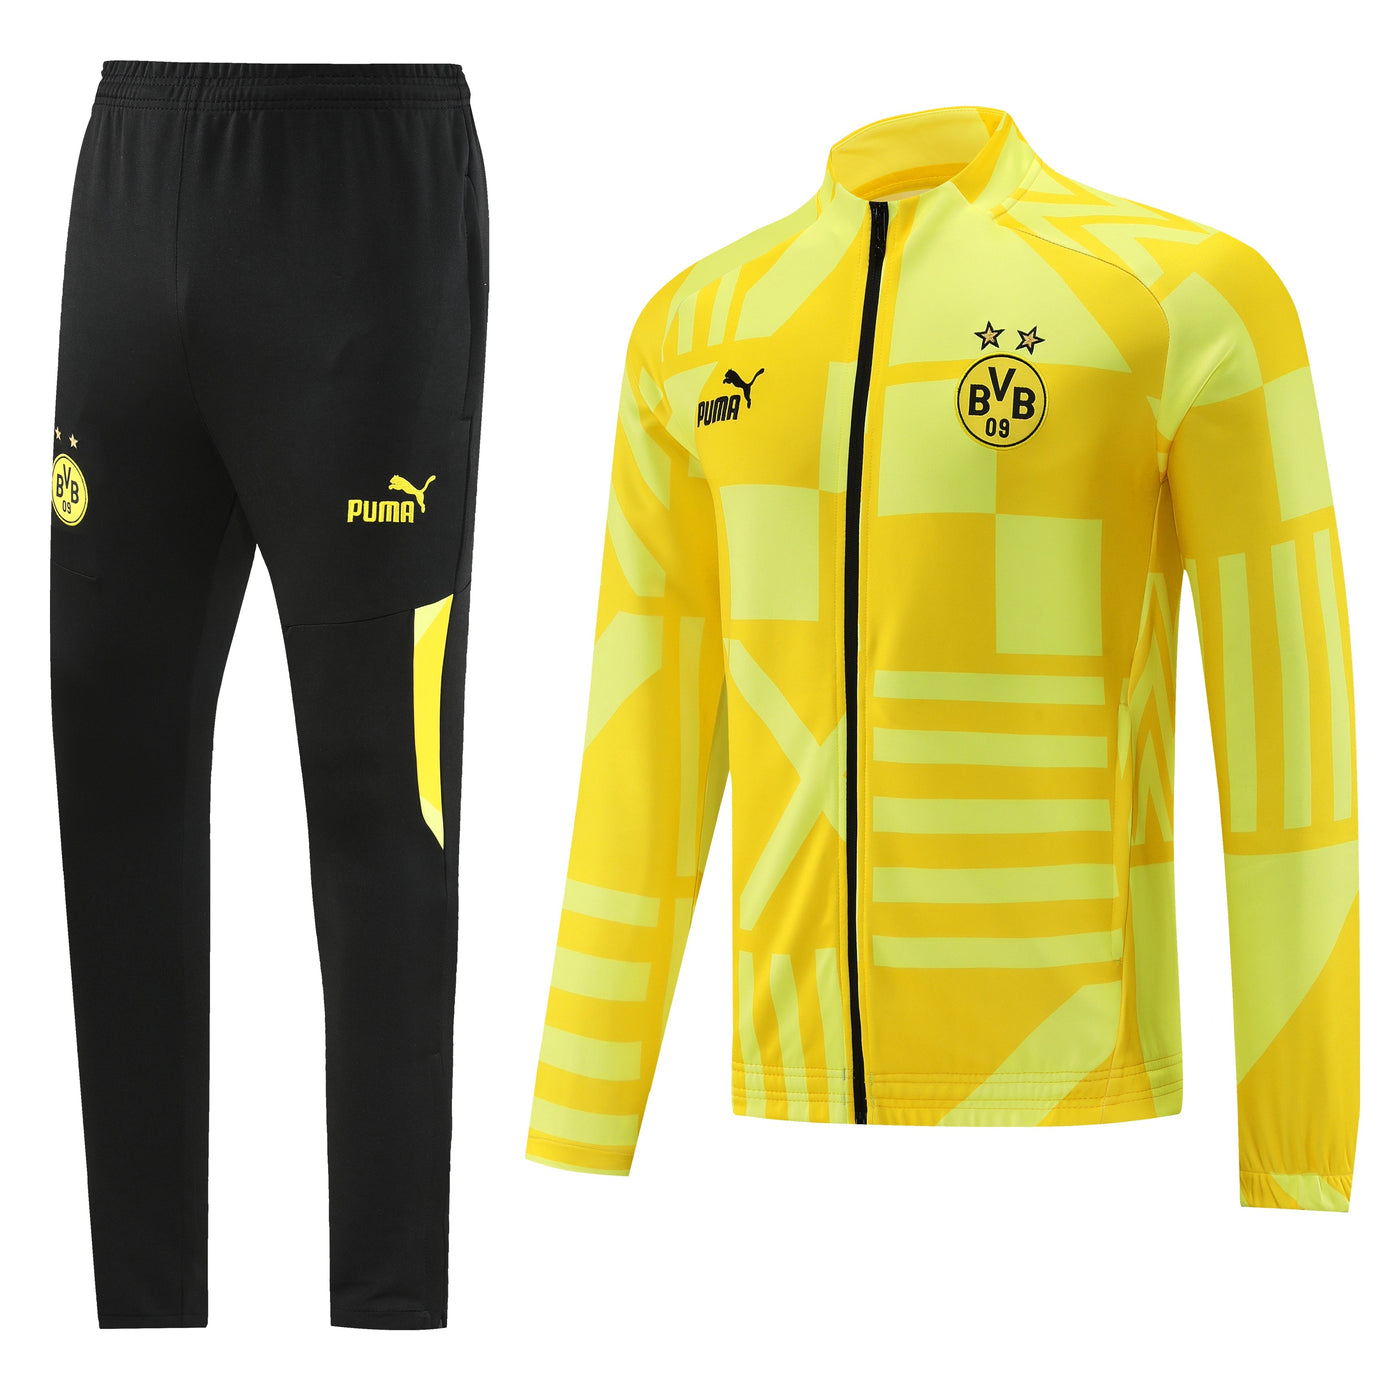 Borussia Dortmund Tracksuit - Limited edition yellow